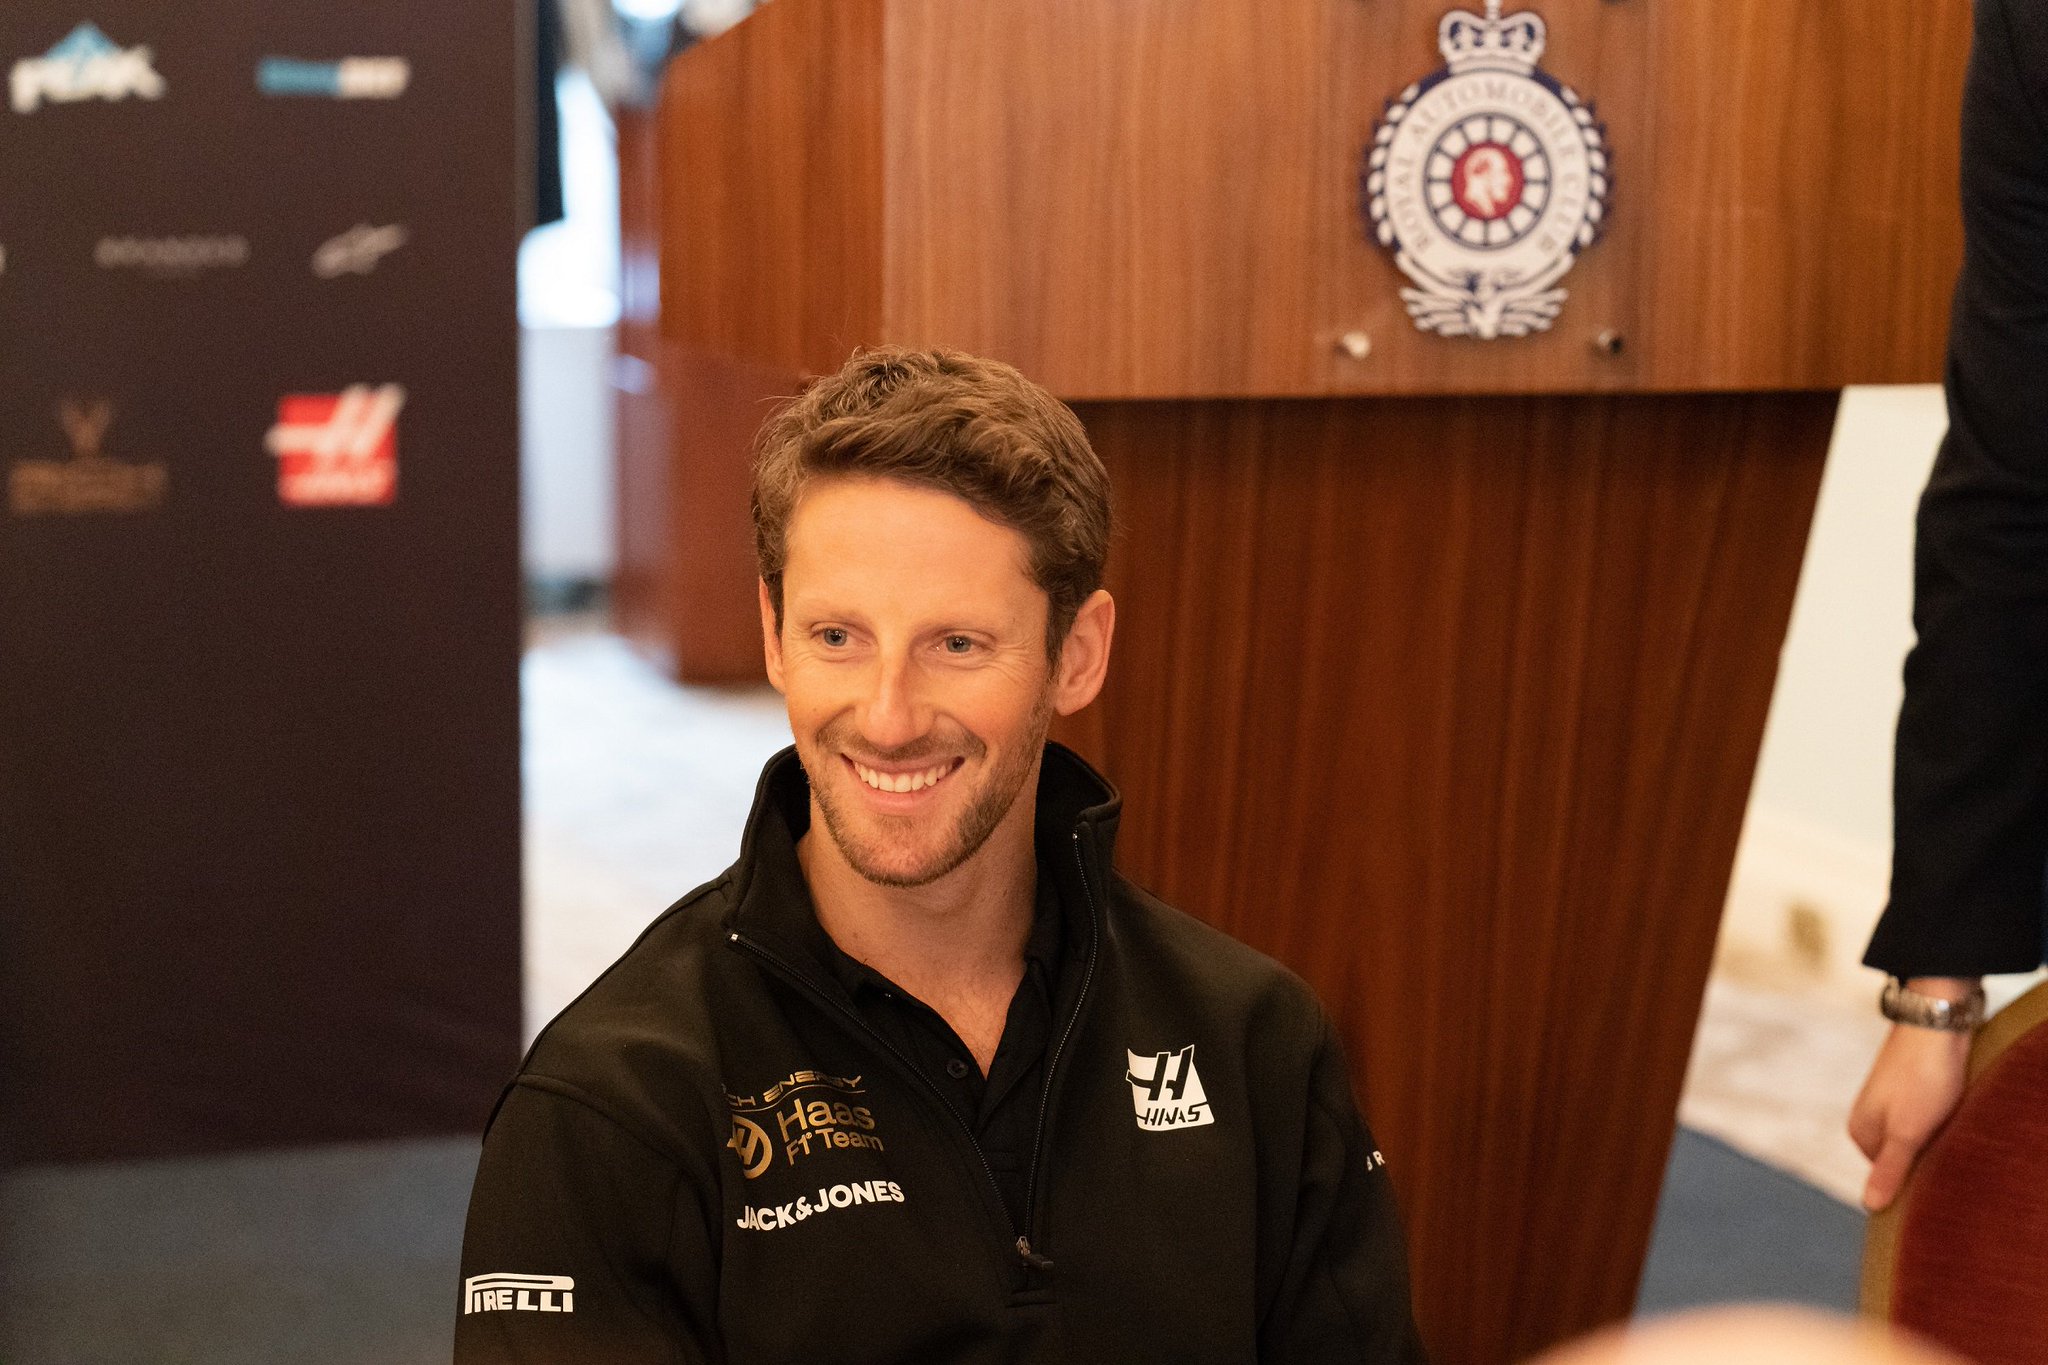 A very happy birthday to driver Romain Grosjean! 